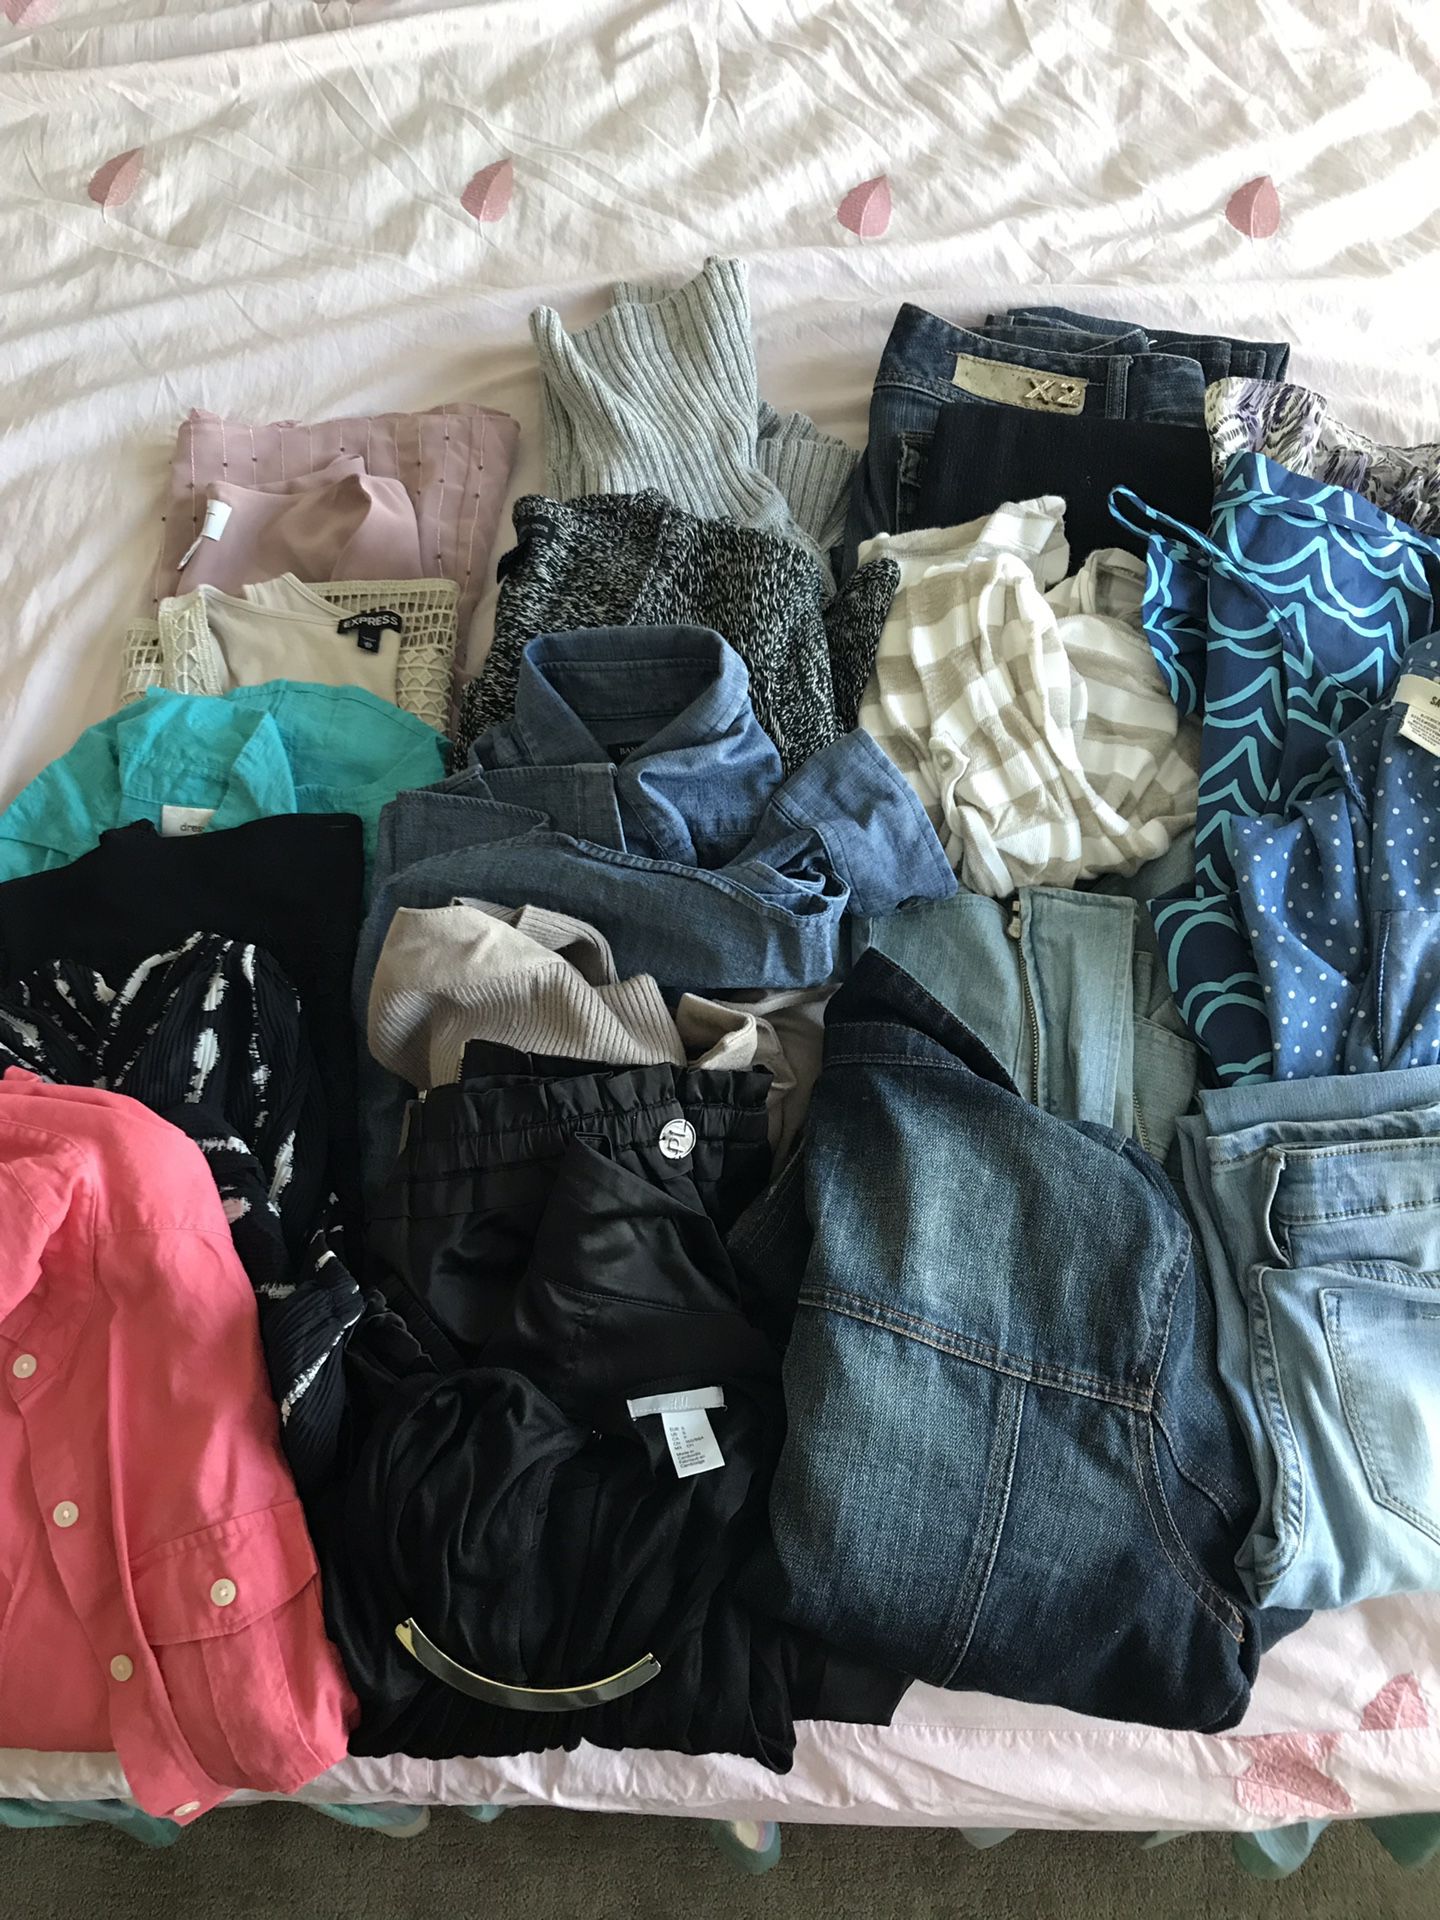 Bundle / lot of women’s clothing